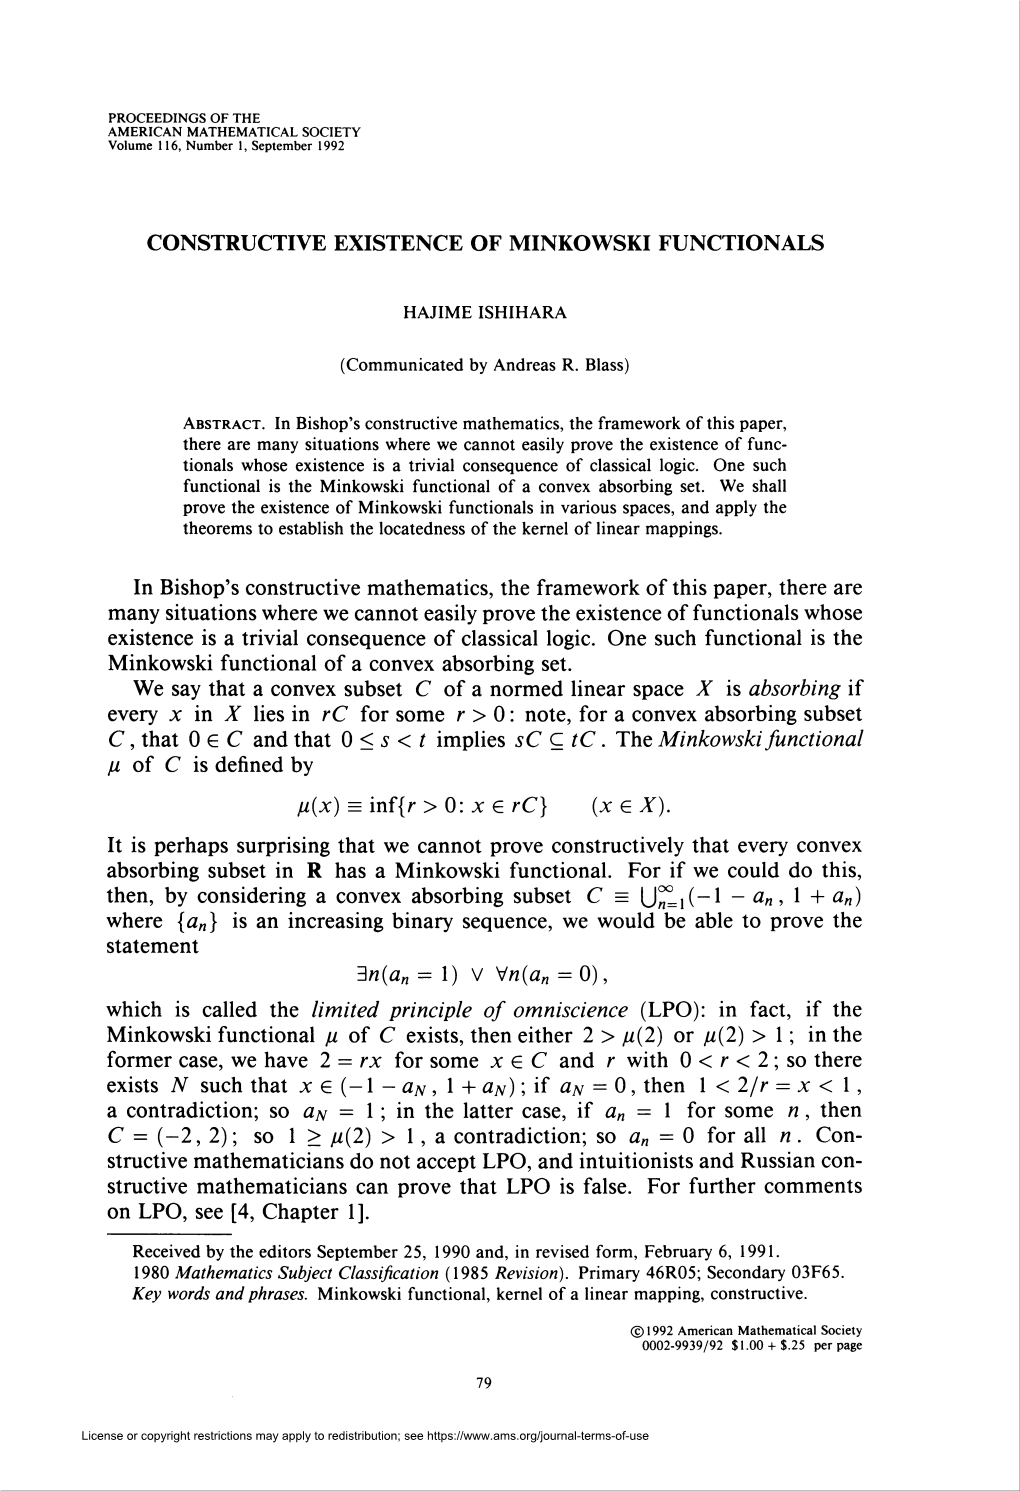 Constructive Existence of Minkowski Functionals